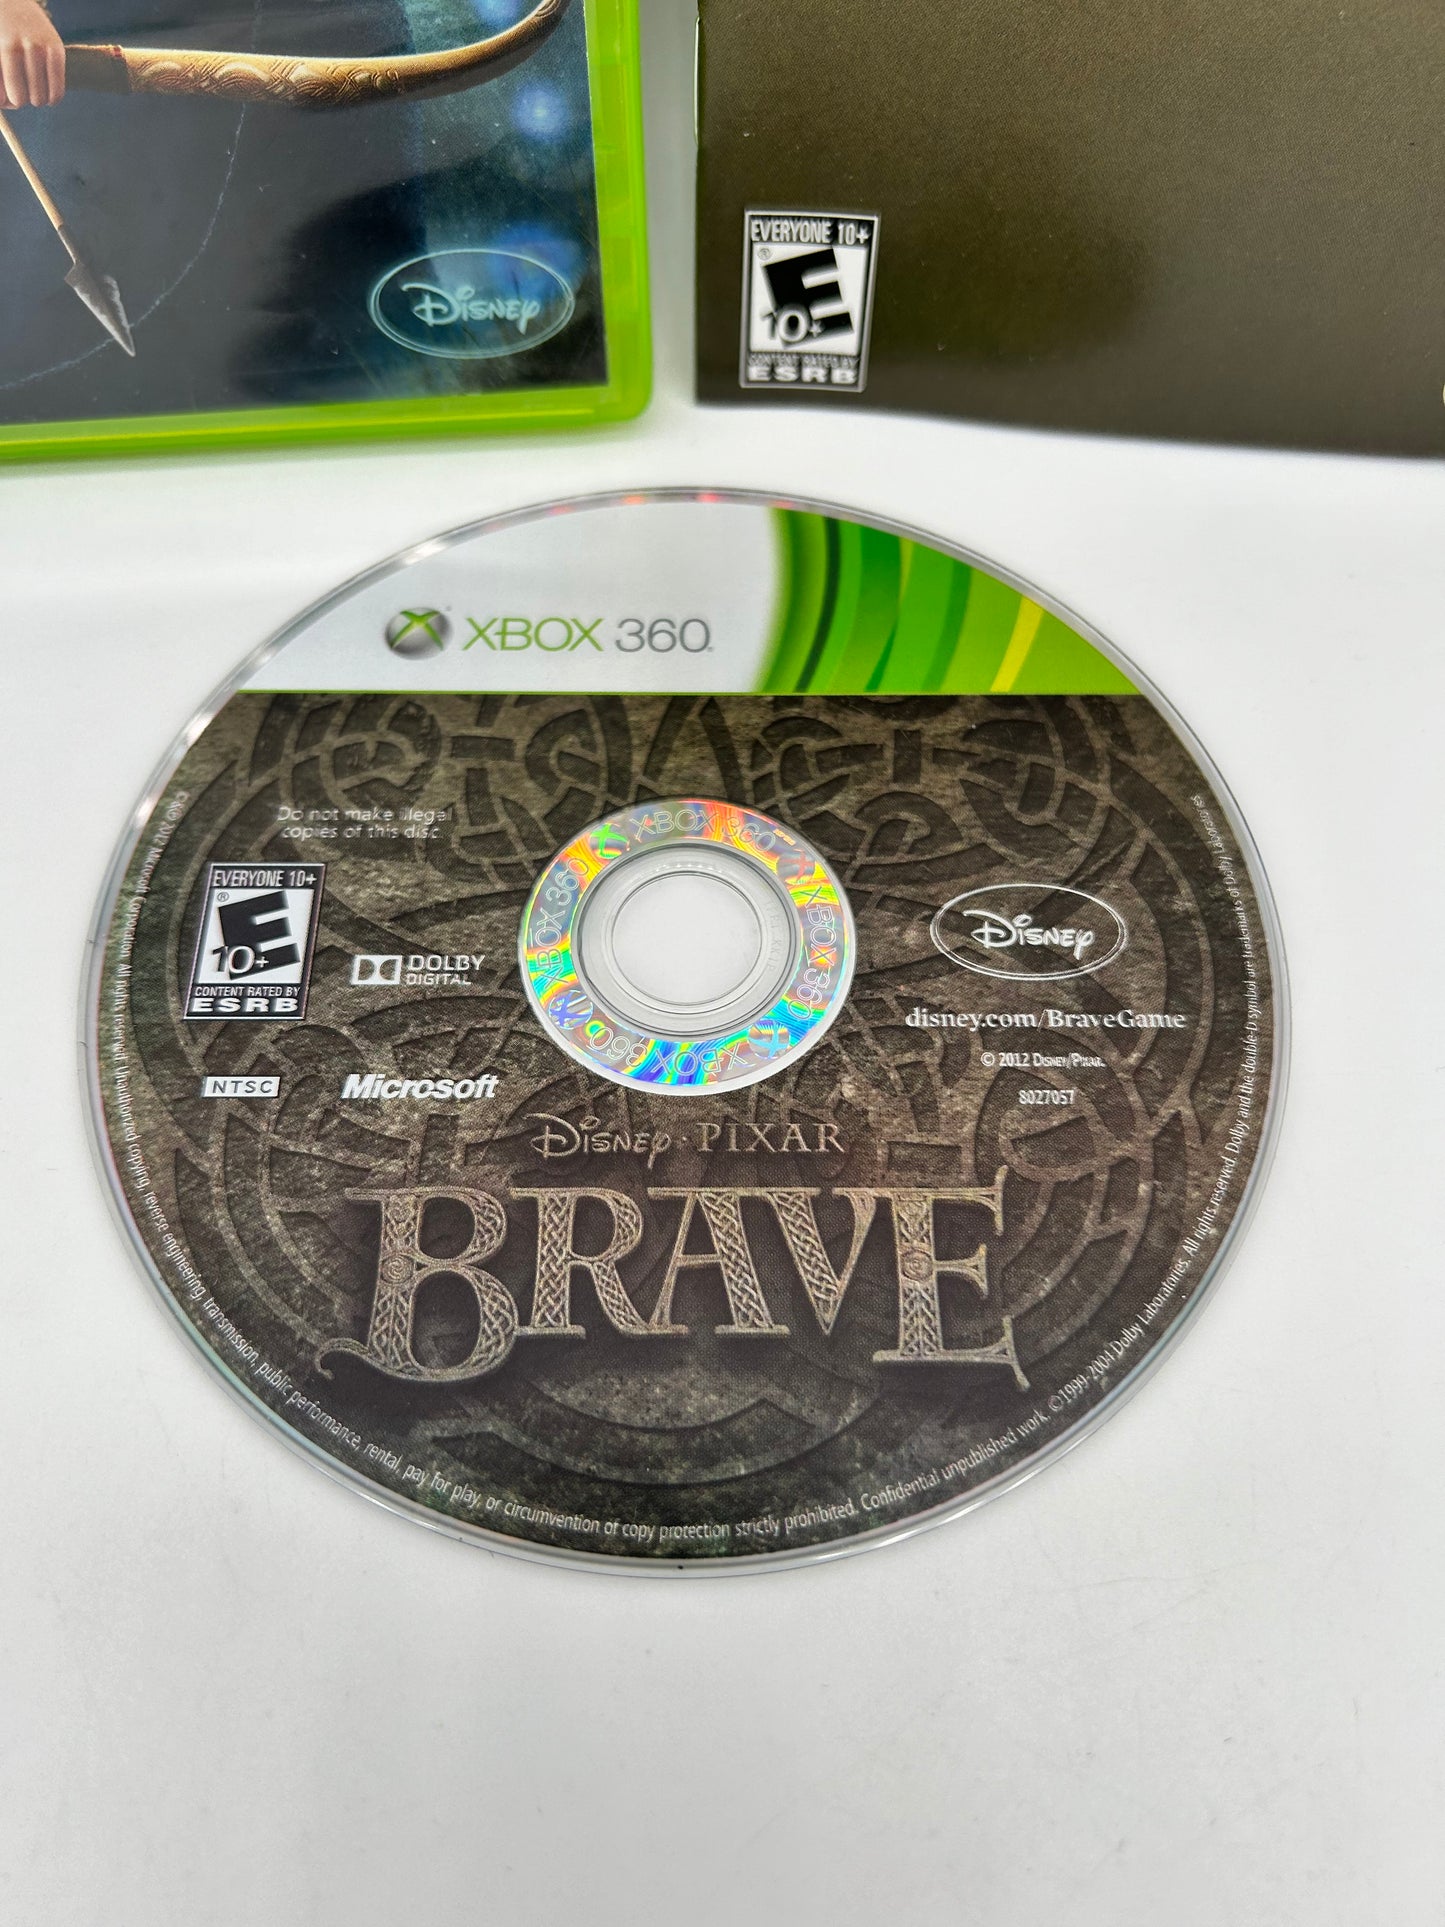 Microsoft XBOX 360 | BRAVE THE Video GAME